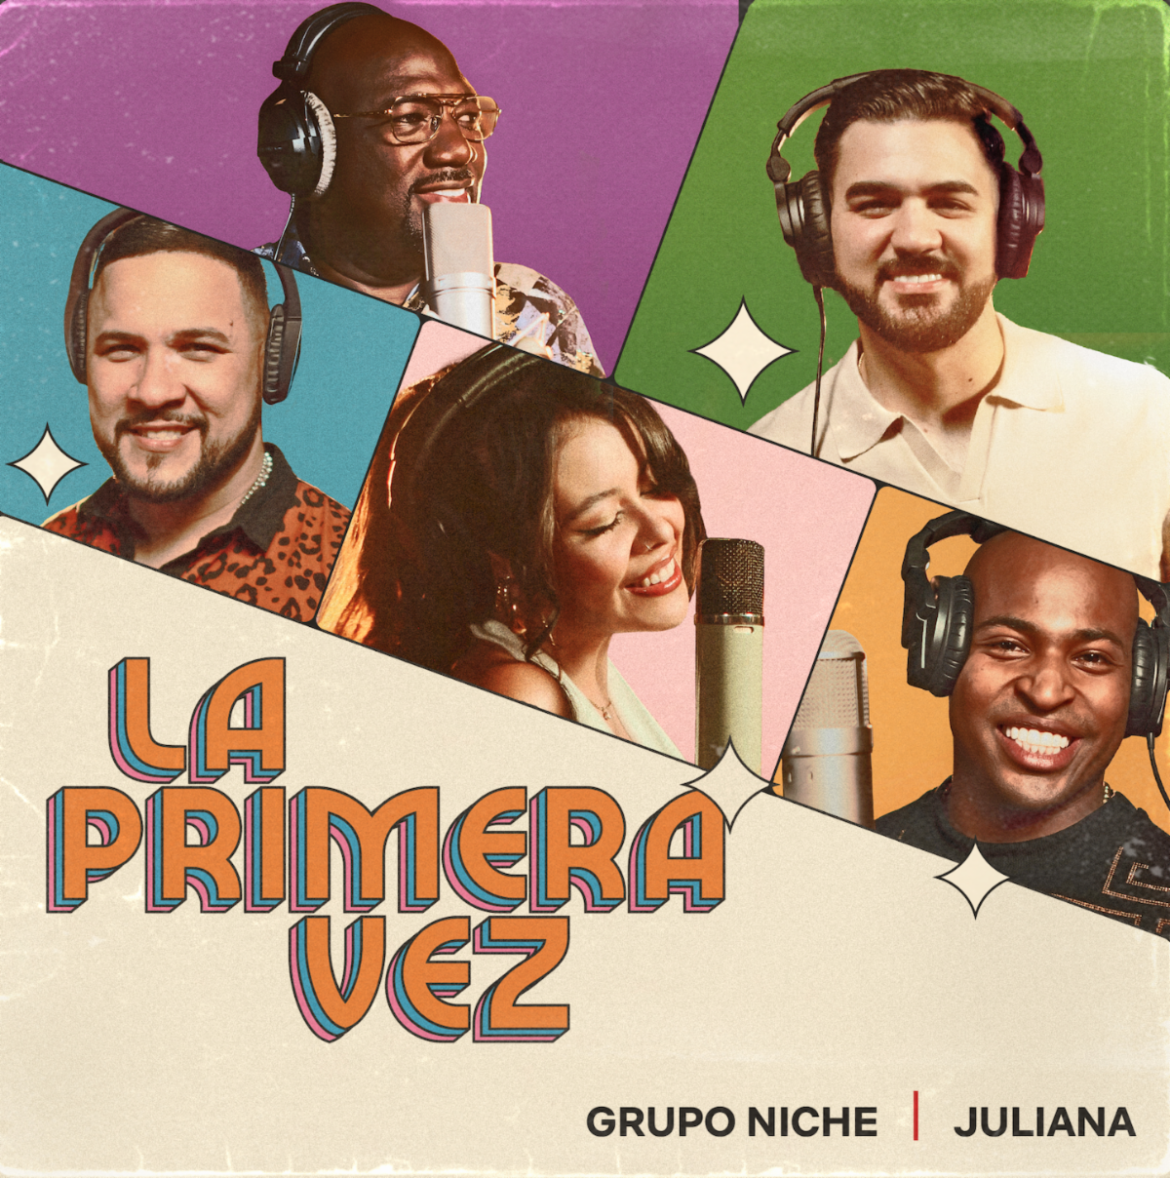 Grupo Niche lanza nuevo sencillo “La Primera Vez” junto a Juliana Velásquez